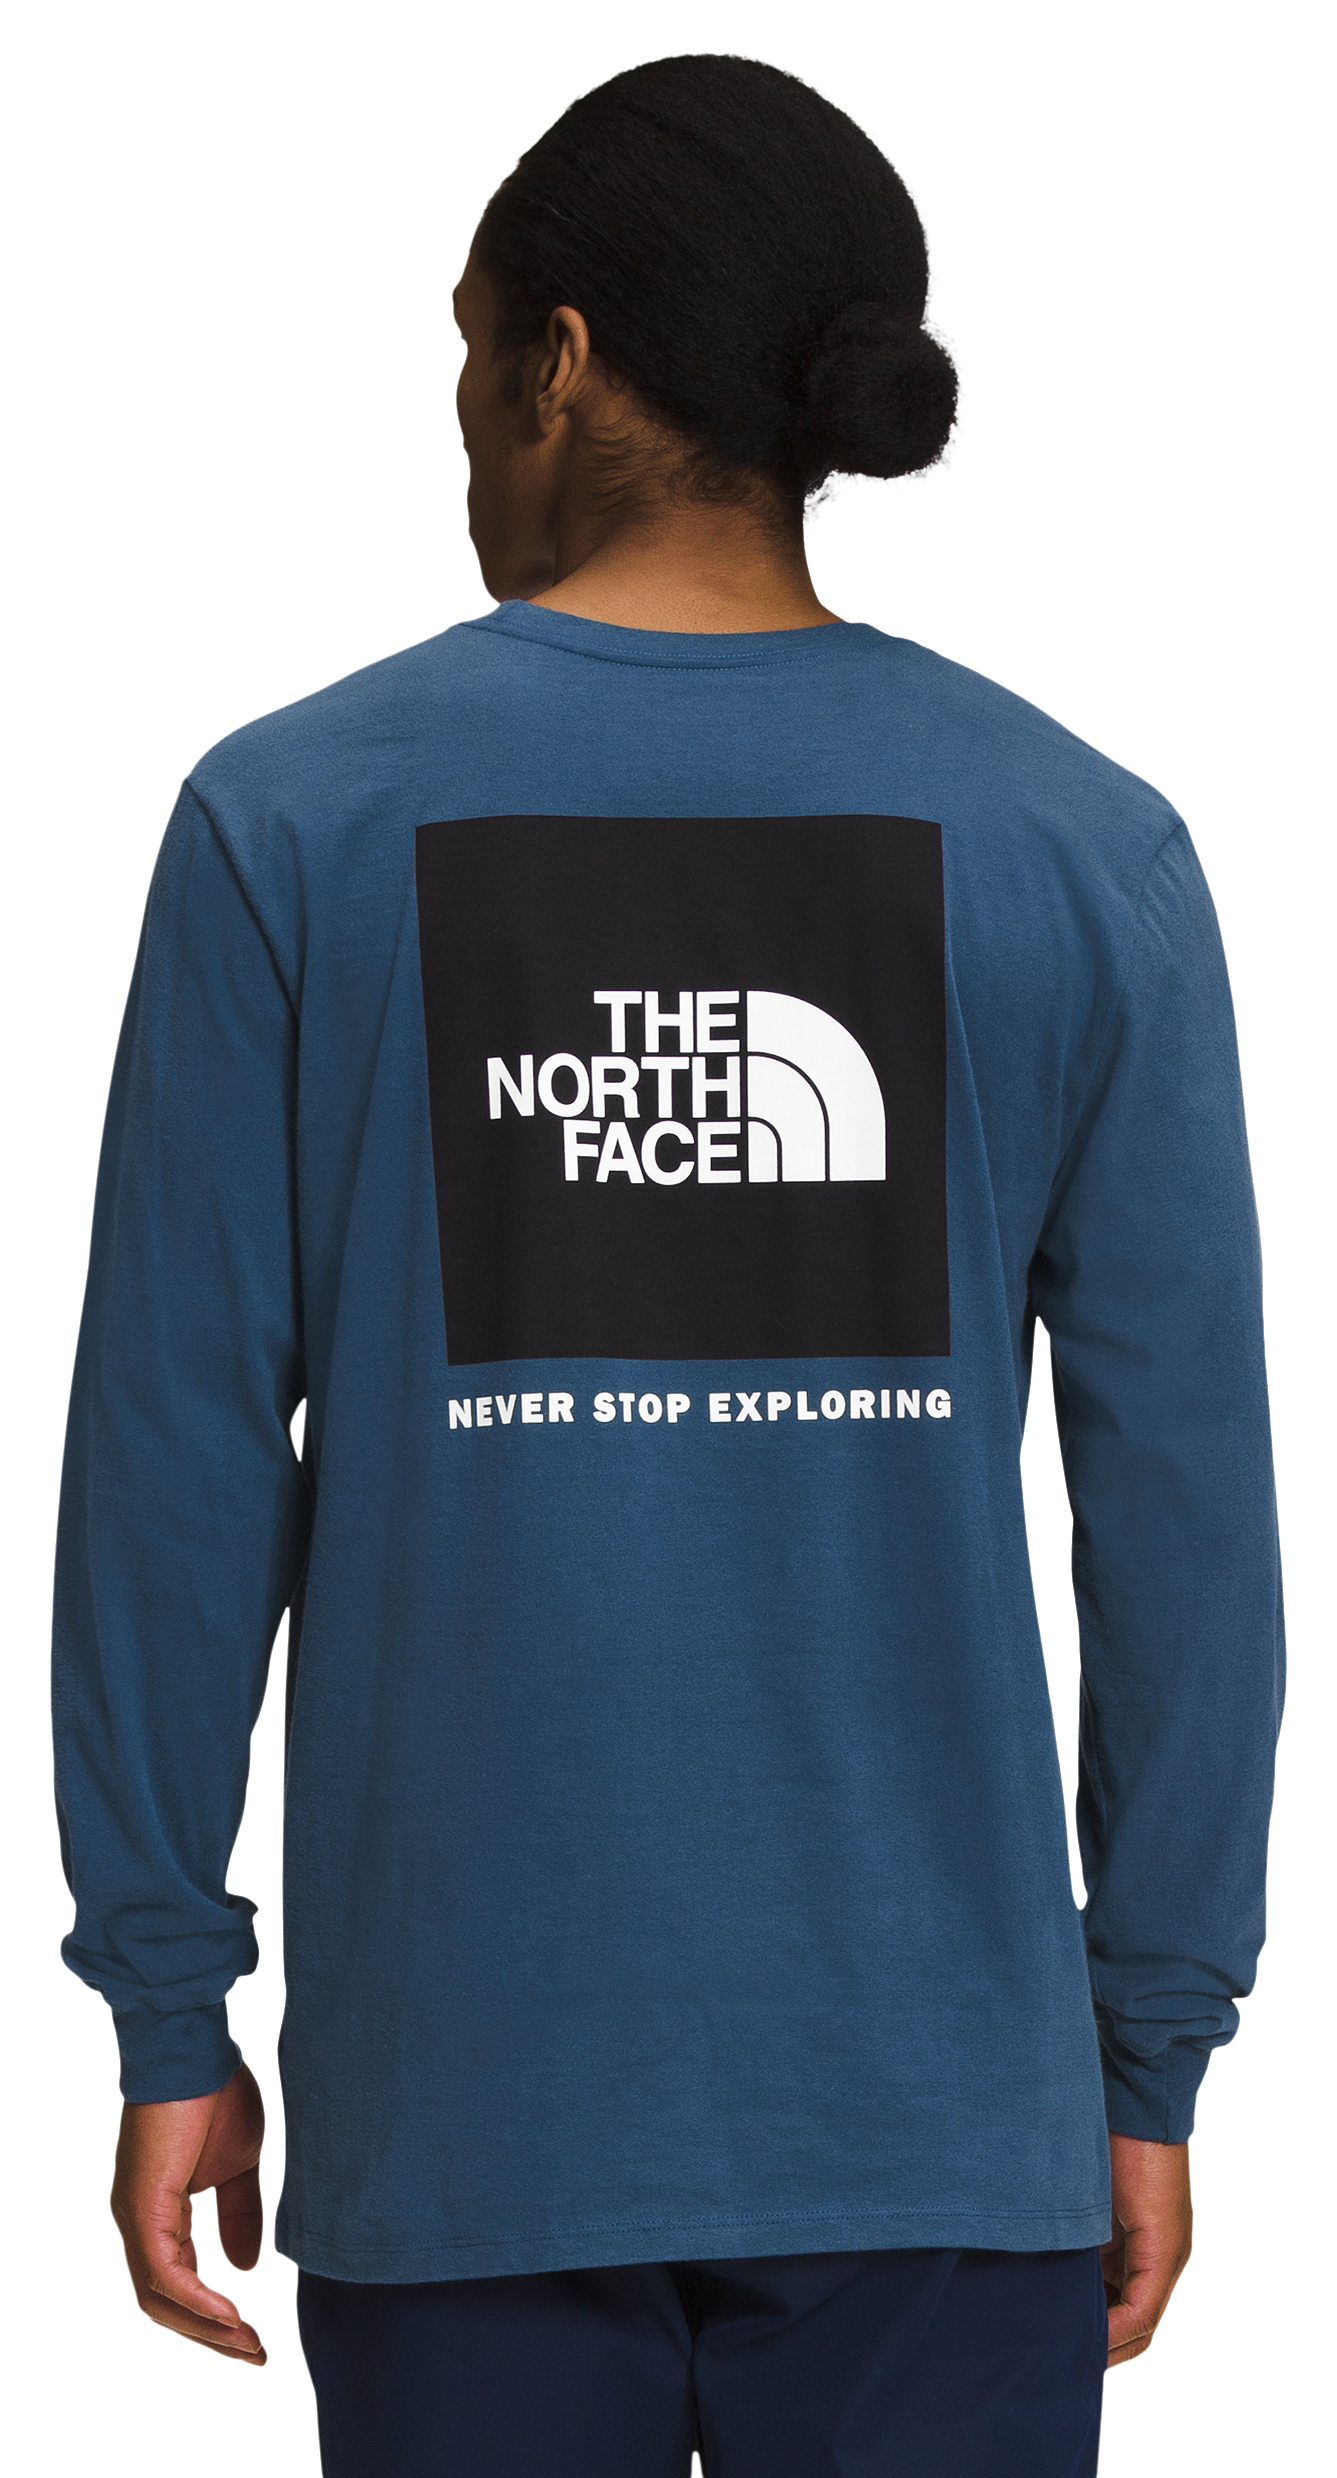 The North Face Box NSE Long-Sleeve Shirt for Men - Shady Blue/TNF Black - XL